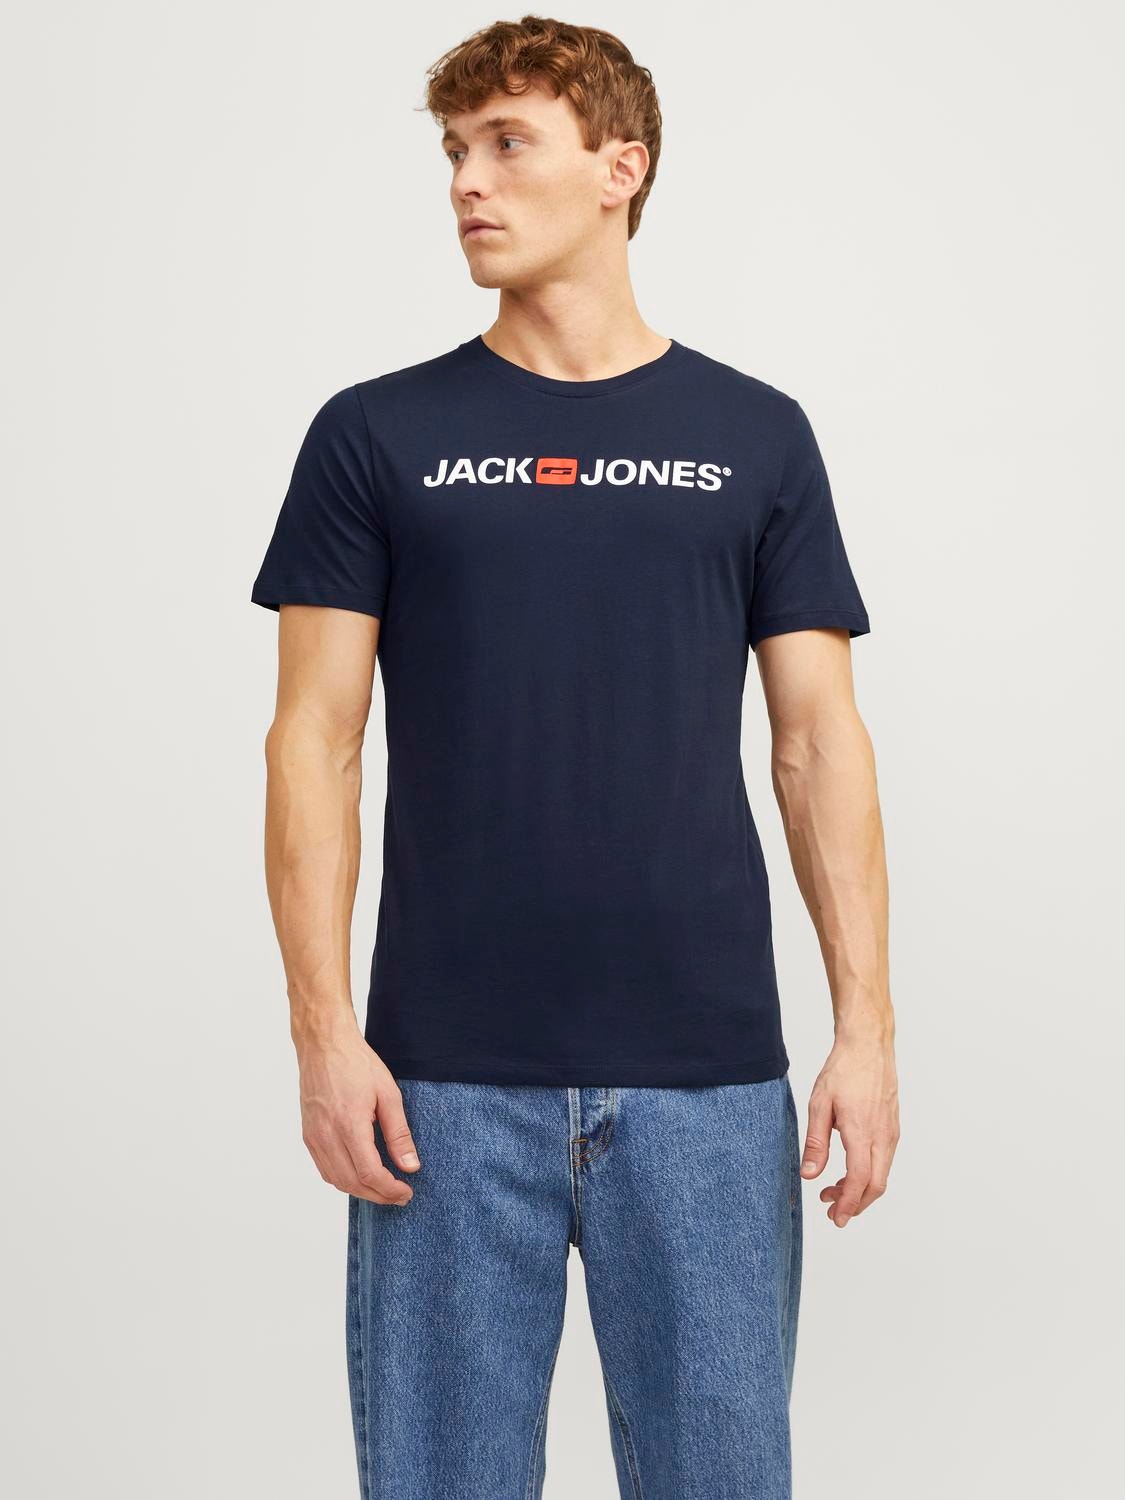 Jack & Jones Logo Pyöreä pääntie T-paita -Navy Blazer - 12137126